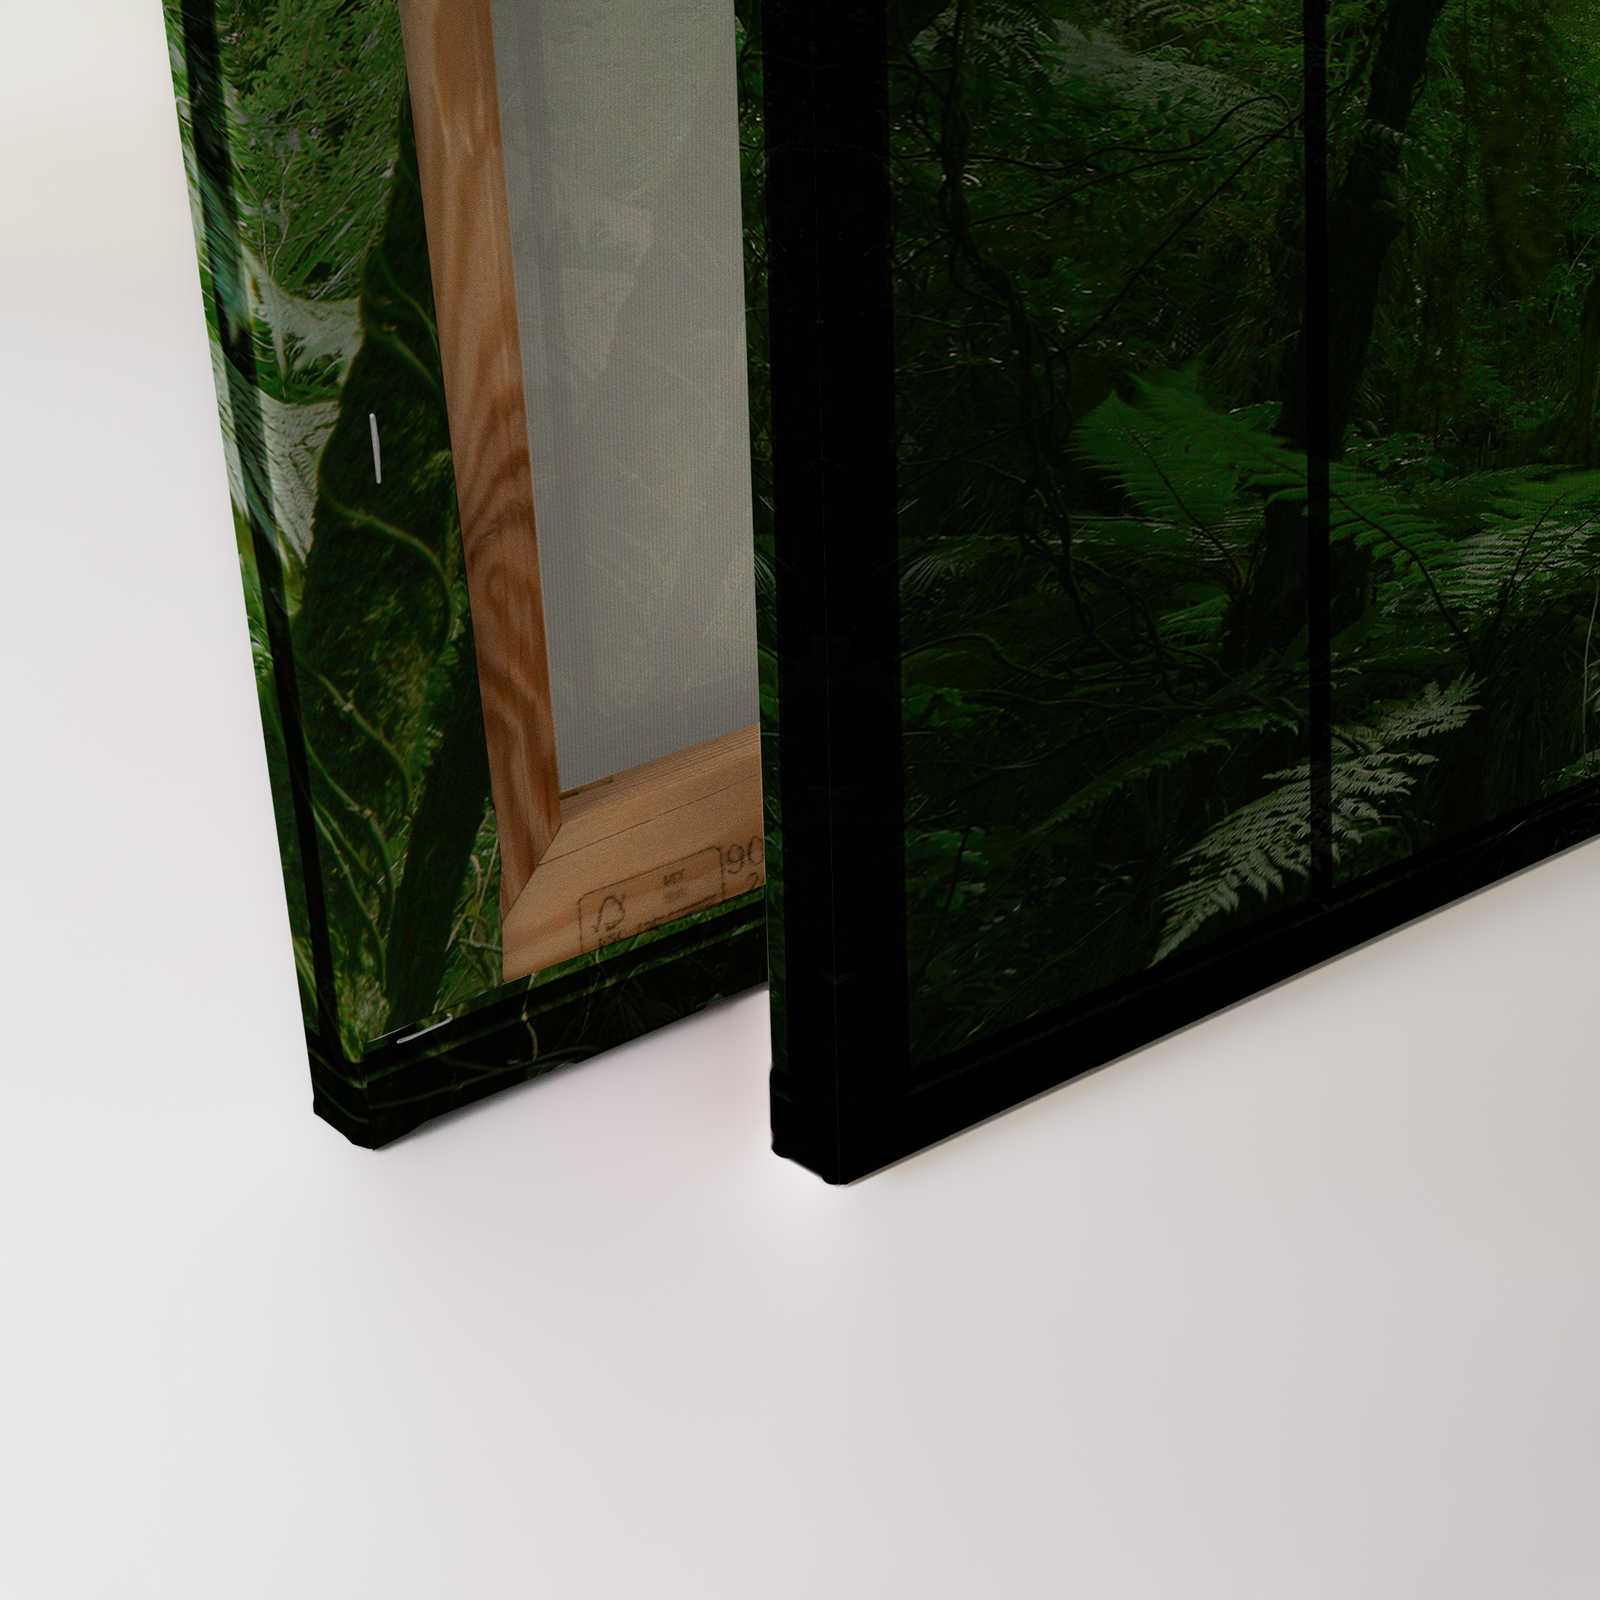             Rainforest 2 - Loftfenster Leinwandbild mit Dschungel Aussicht – 0,90 m x 0,60 m
        